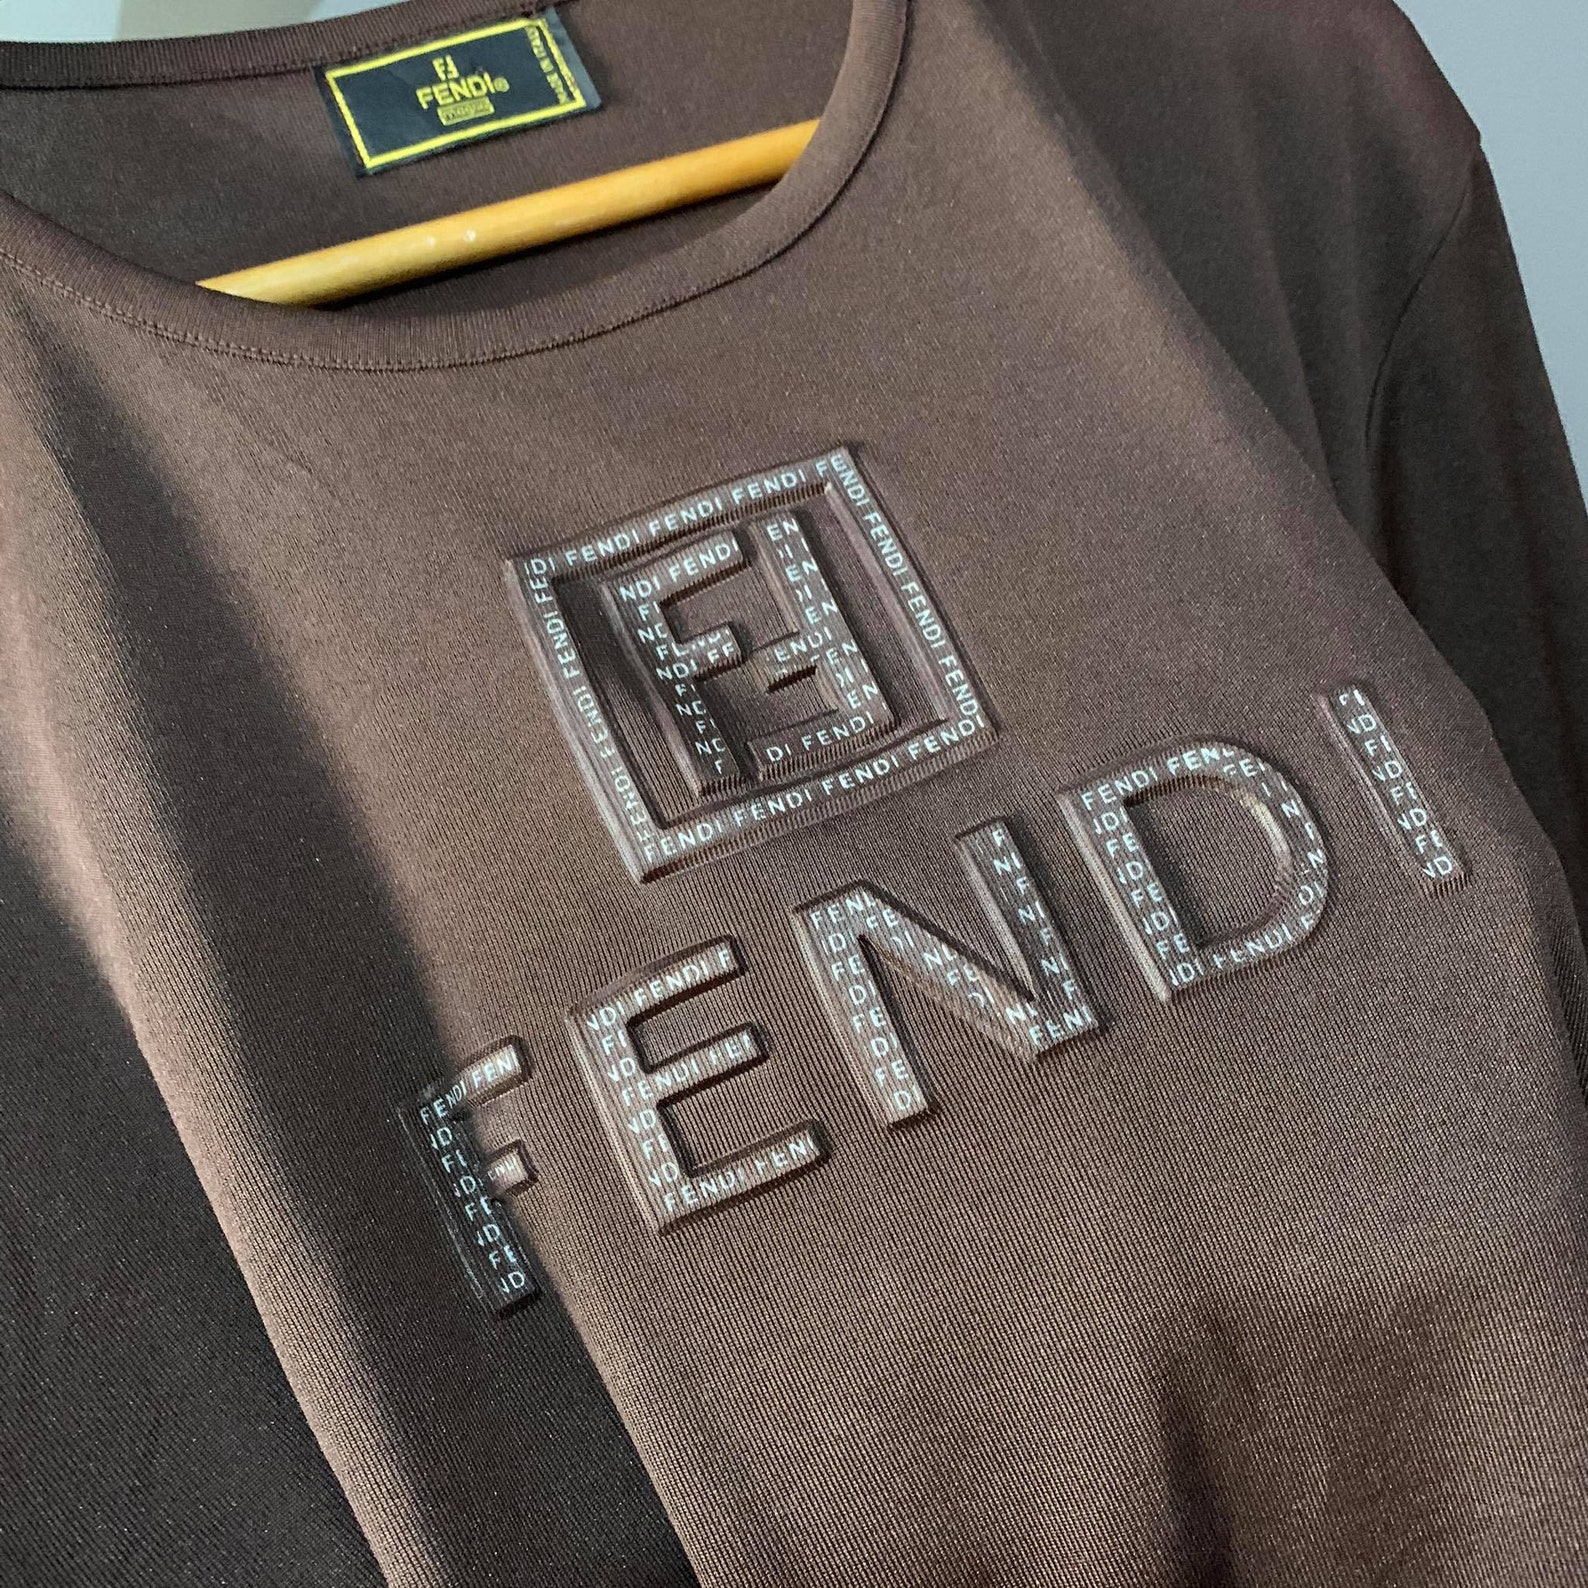 Authentic Vintage Fendi shirt t-shirt | Etsy